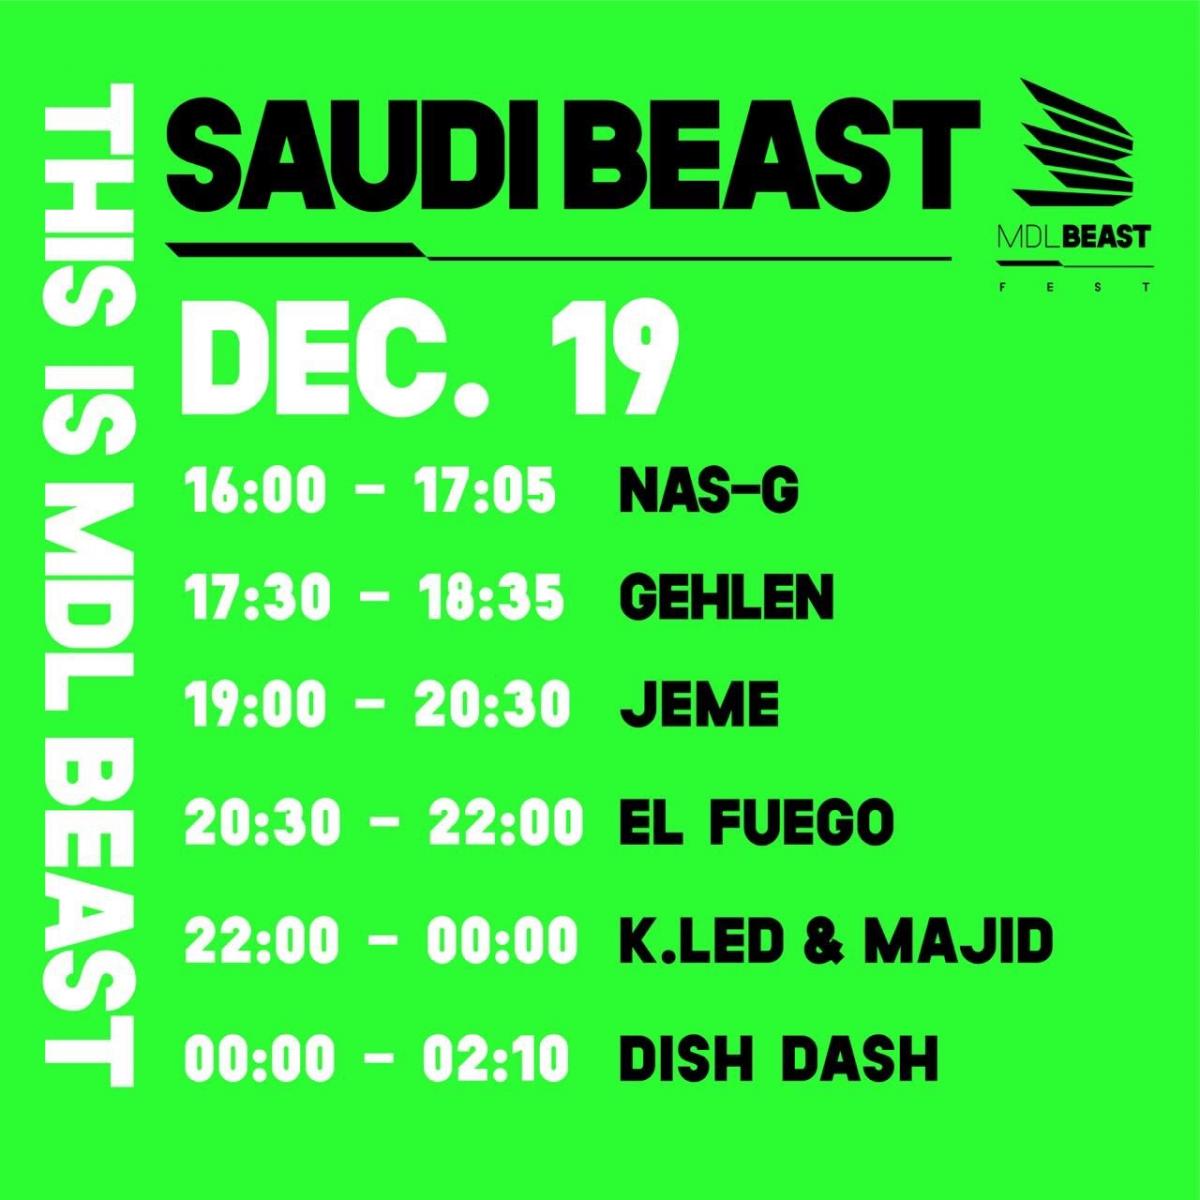 MDL beast schedule 